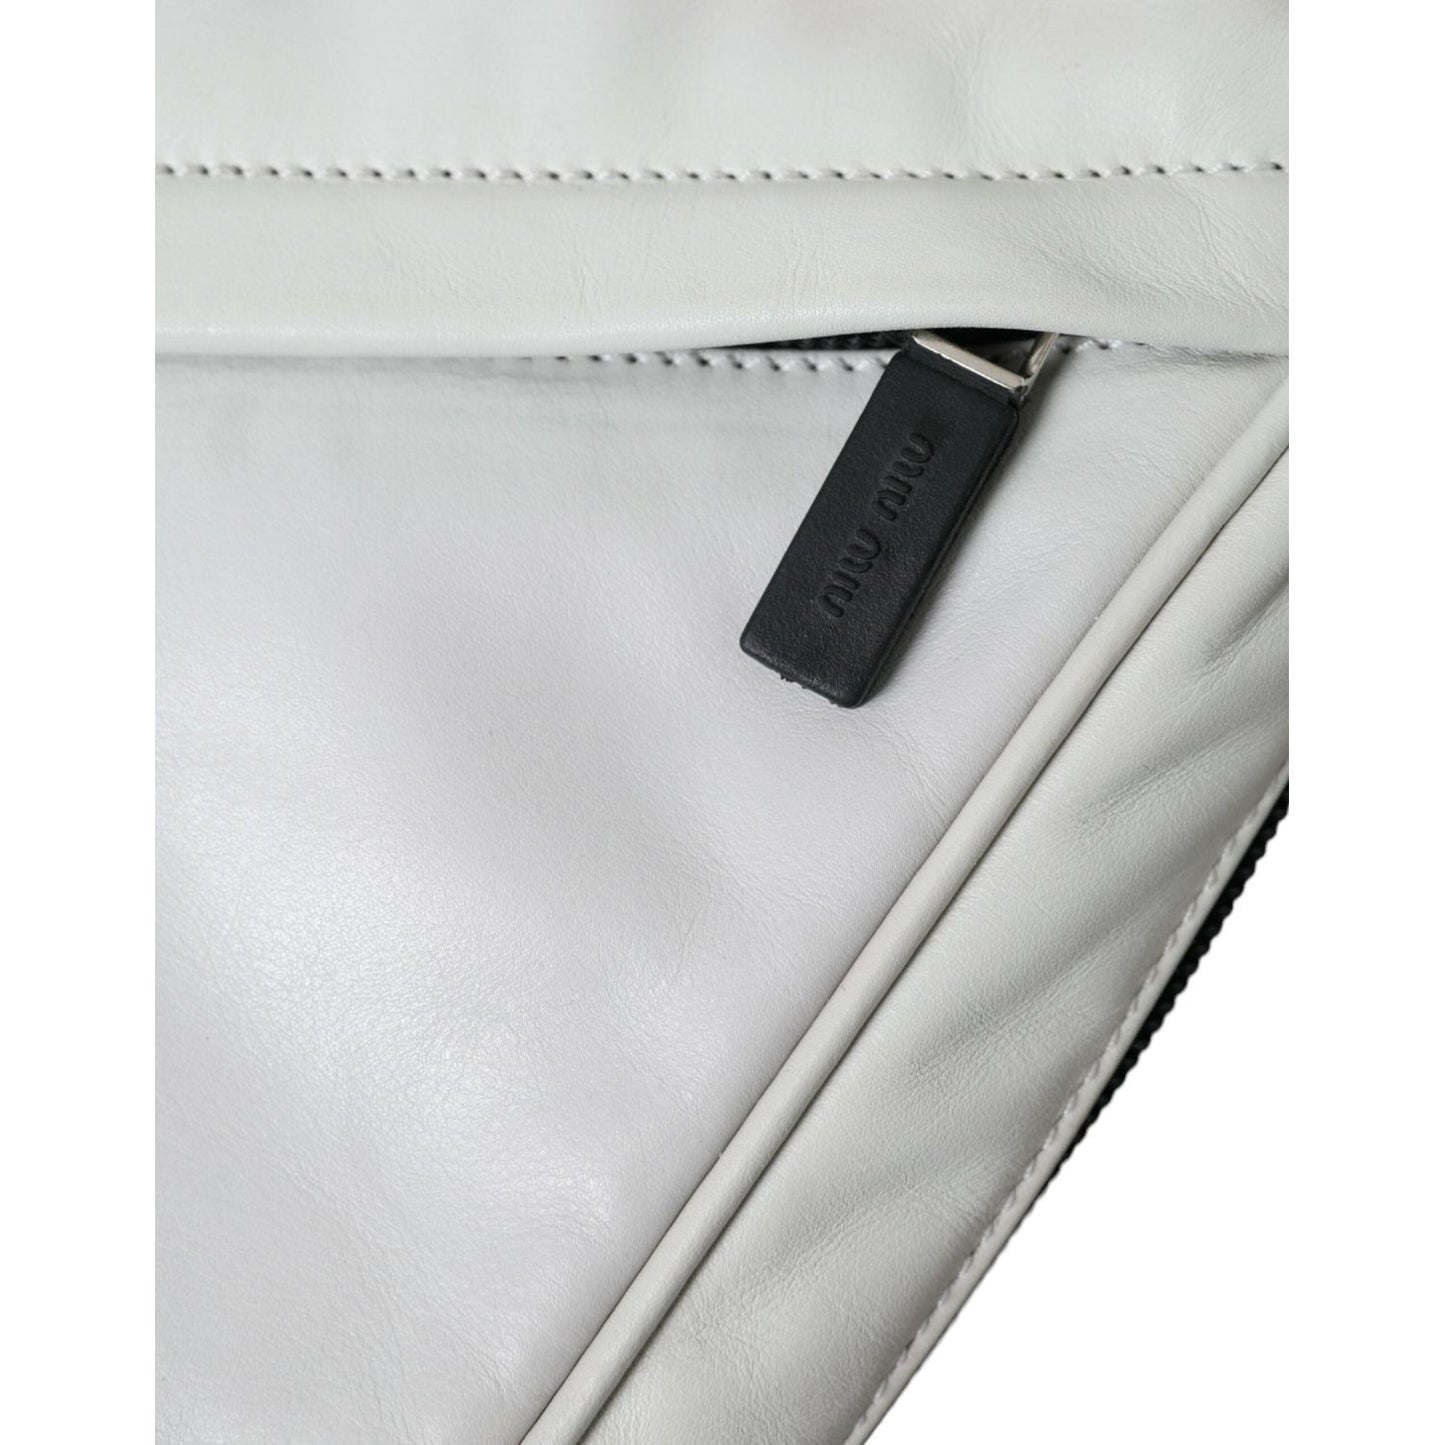 Miu Miu Elegant Black and White Leather Crossbody Bag elegant-black-and-white-leather-crossbody-bag